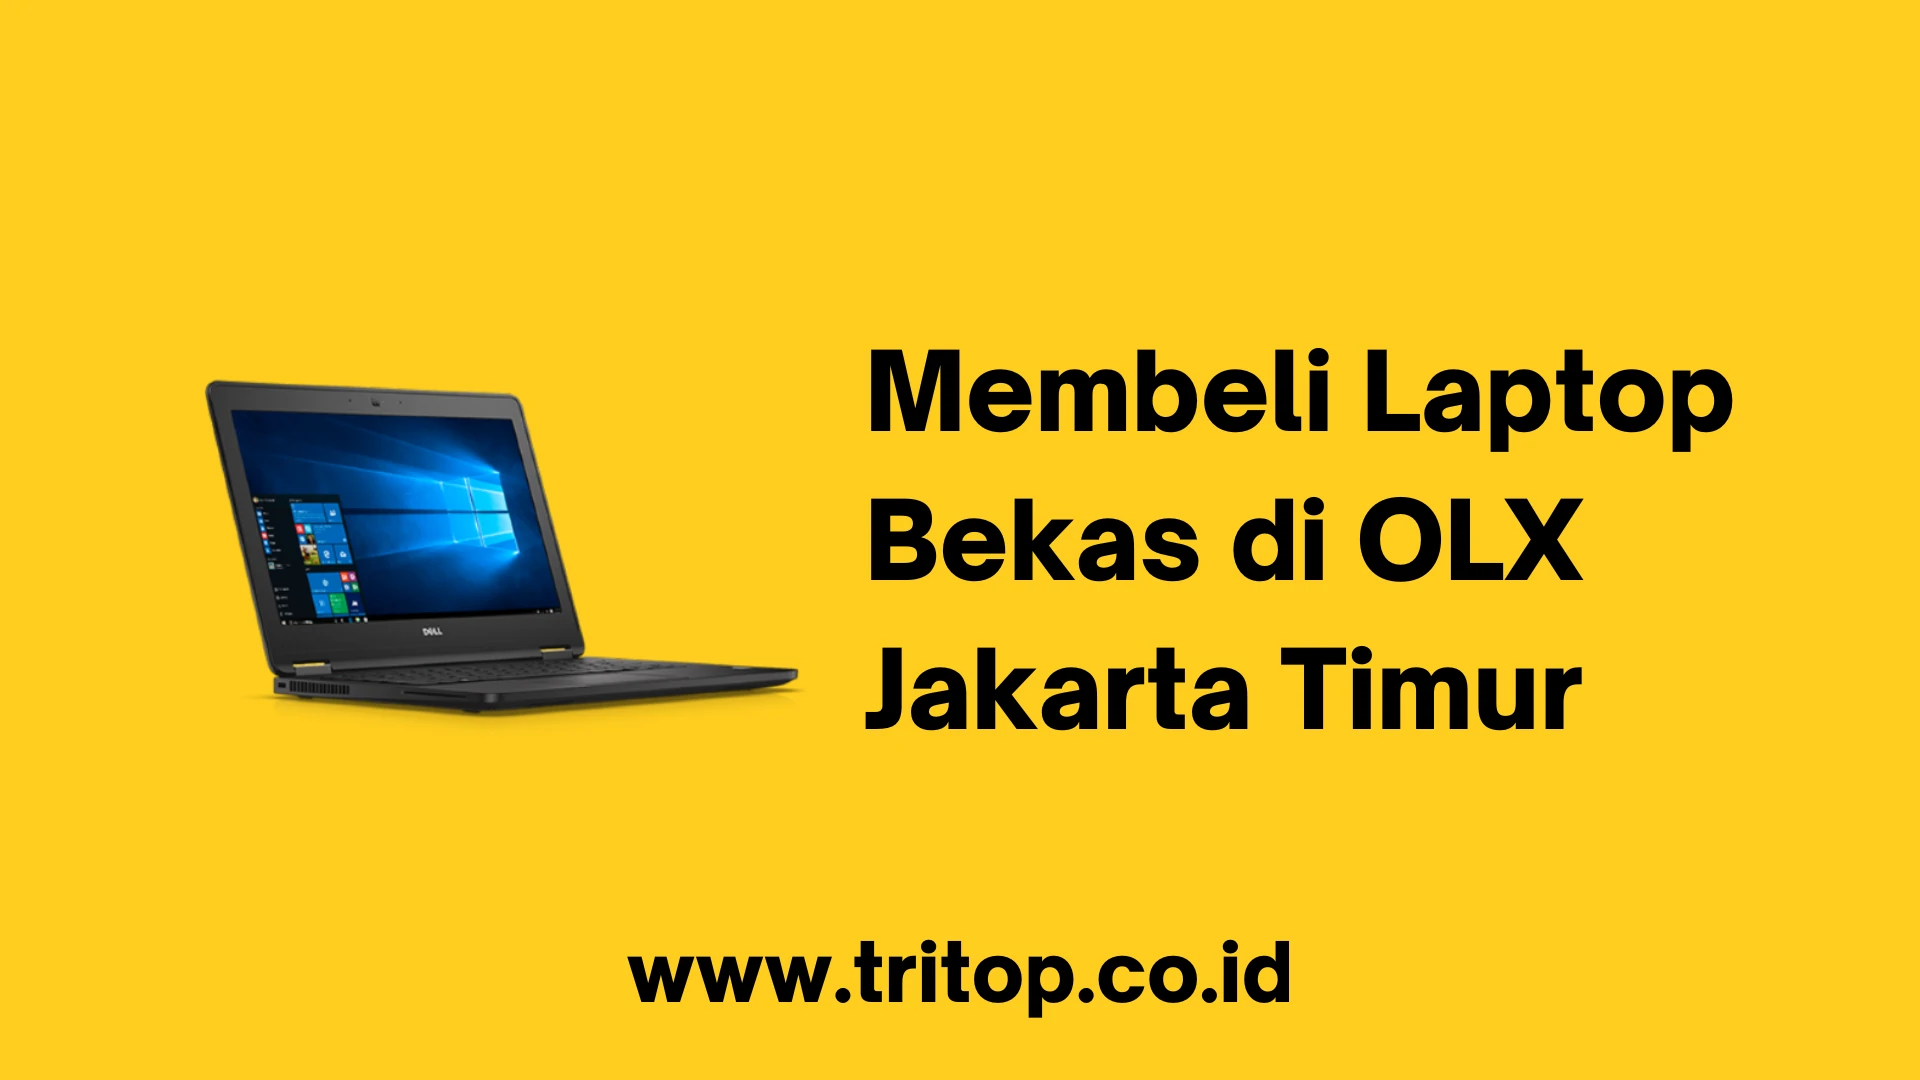 OLX Laptop Bekas Jakarta Timur